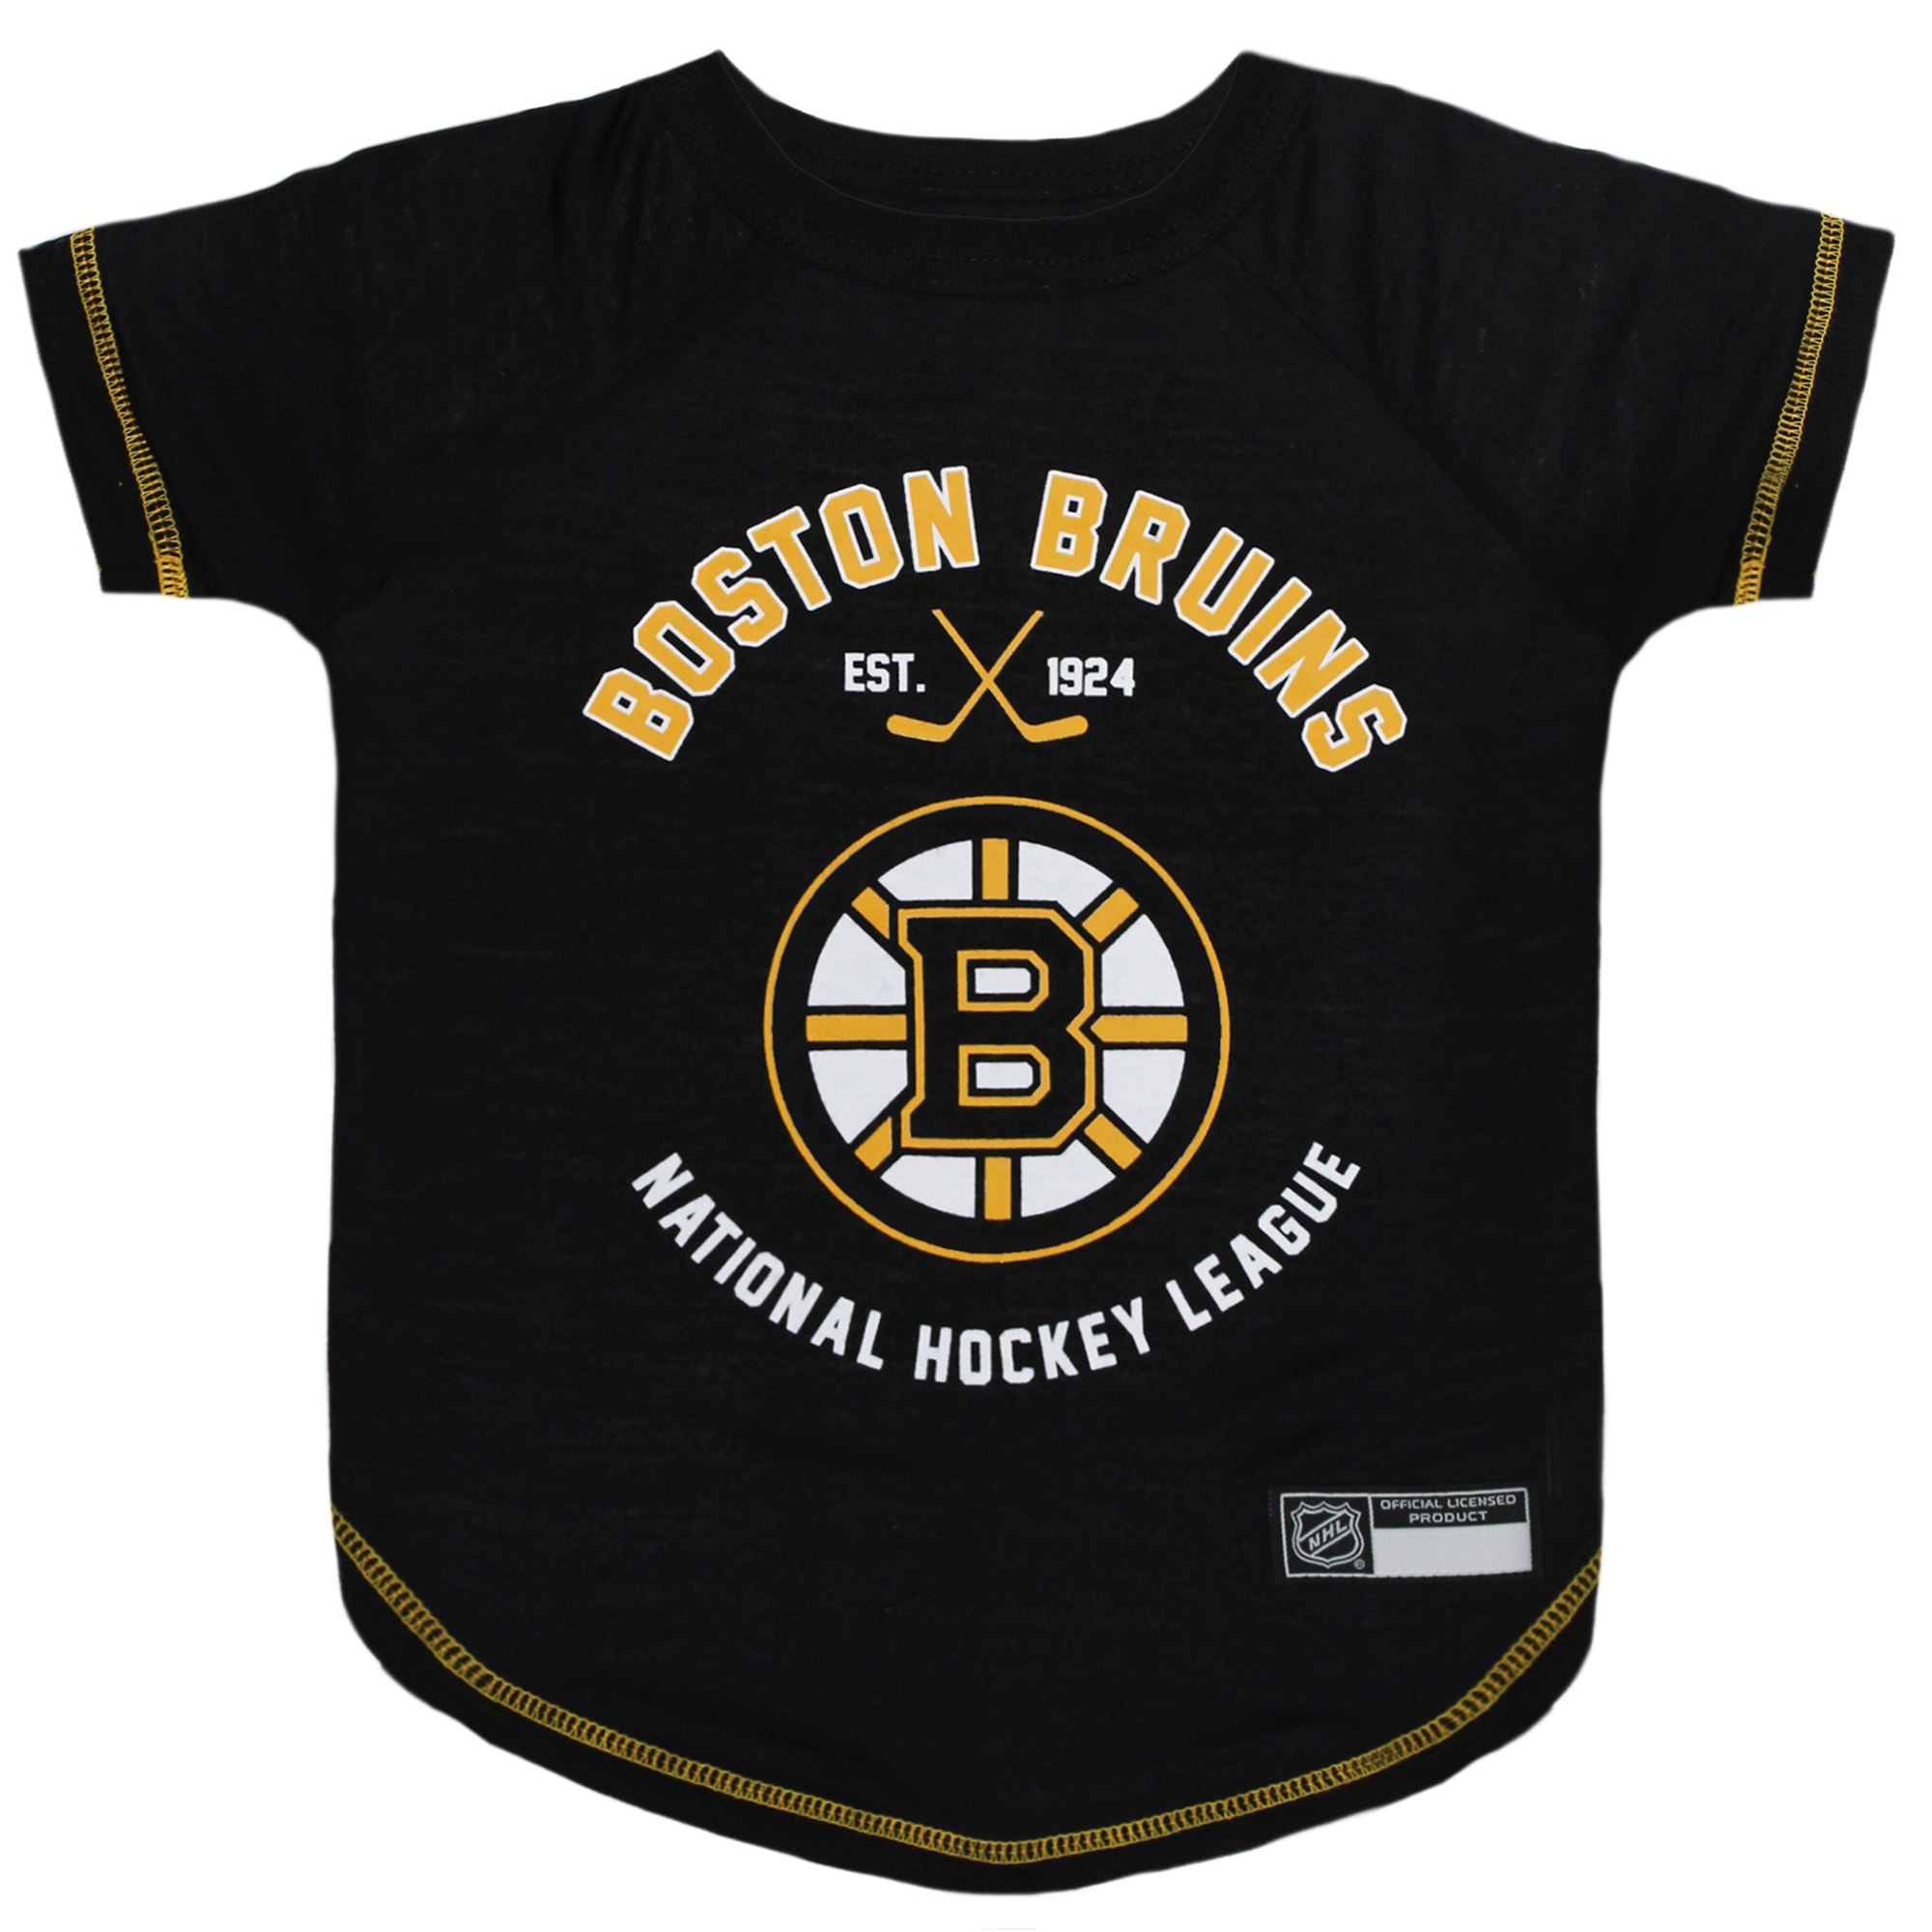 Vintage BOSTON BRUINS Pro Hockey Club Label - 1991 Bruins GET PUMP! (MD)  T-Shirt